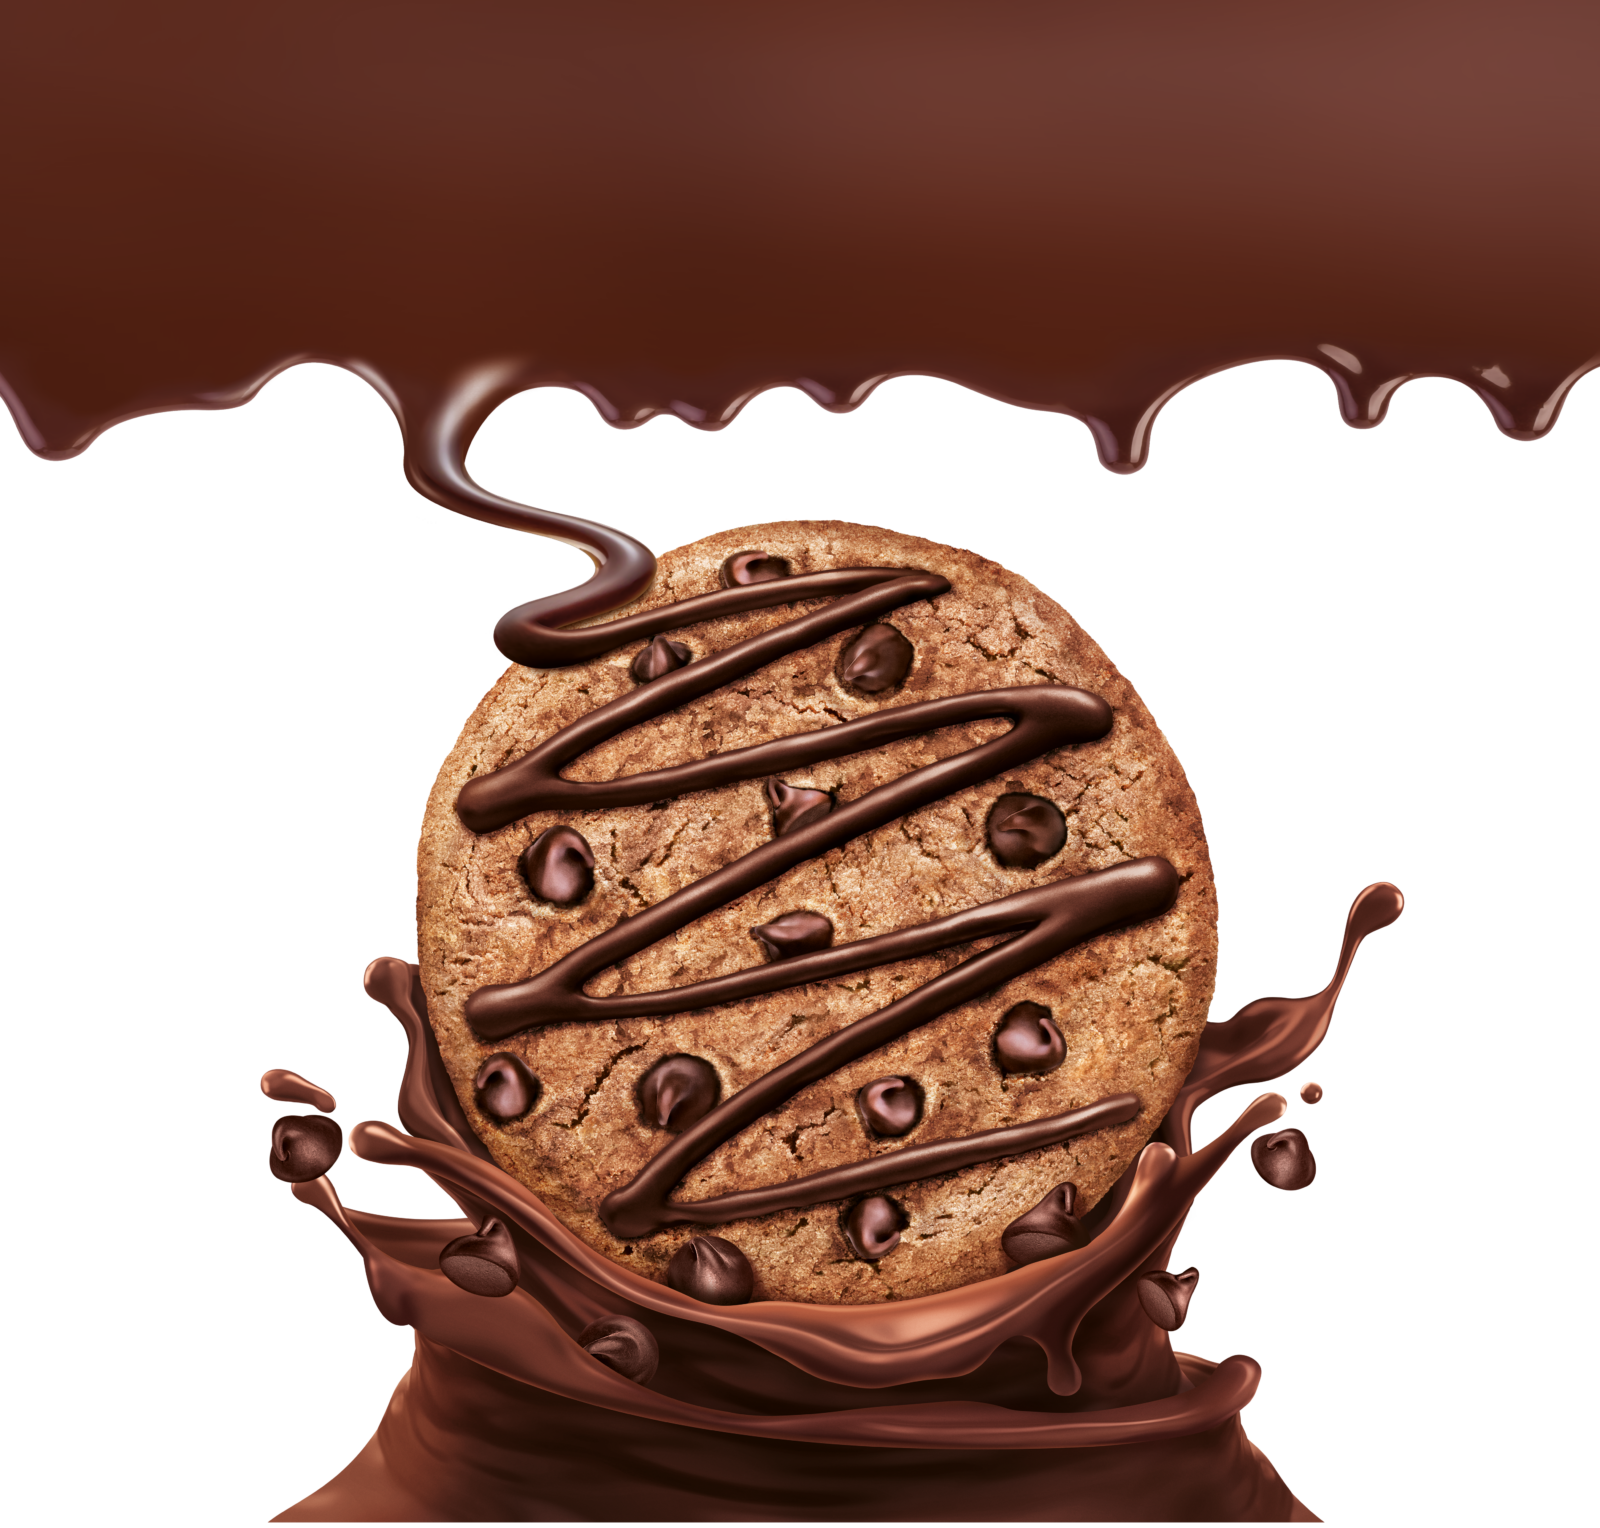 LEXUS Chocolate Chip Cookies 2